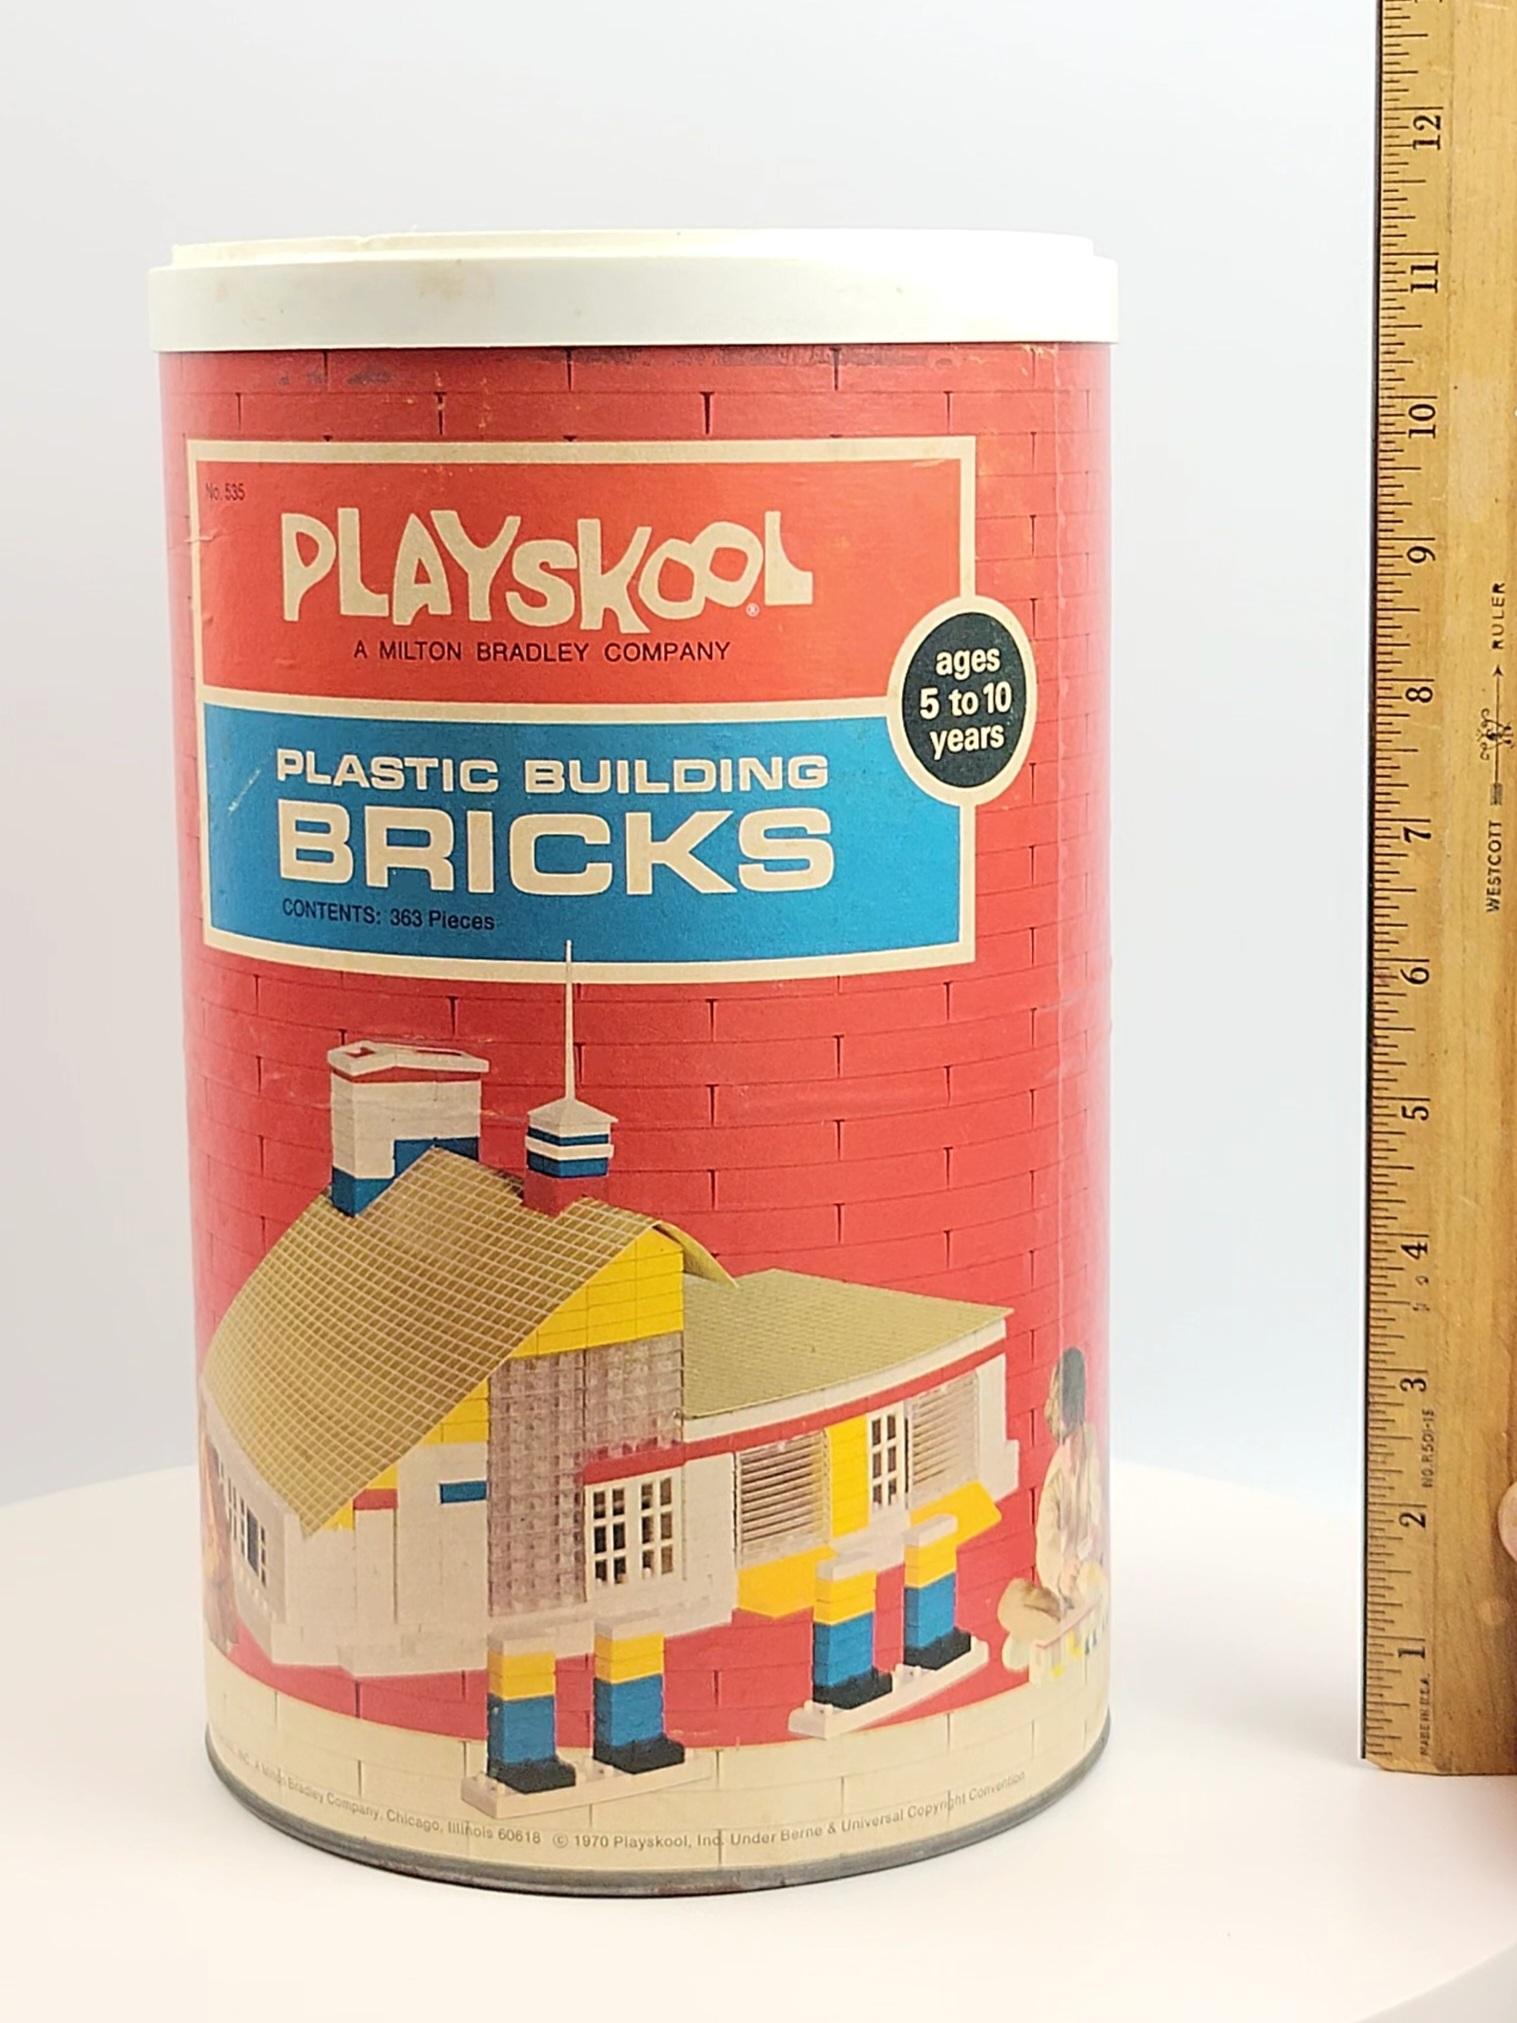 Vintage 1970 Playskool Plastic Building Bricks Set in Original Cannister